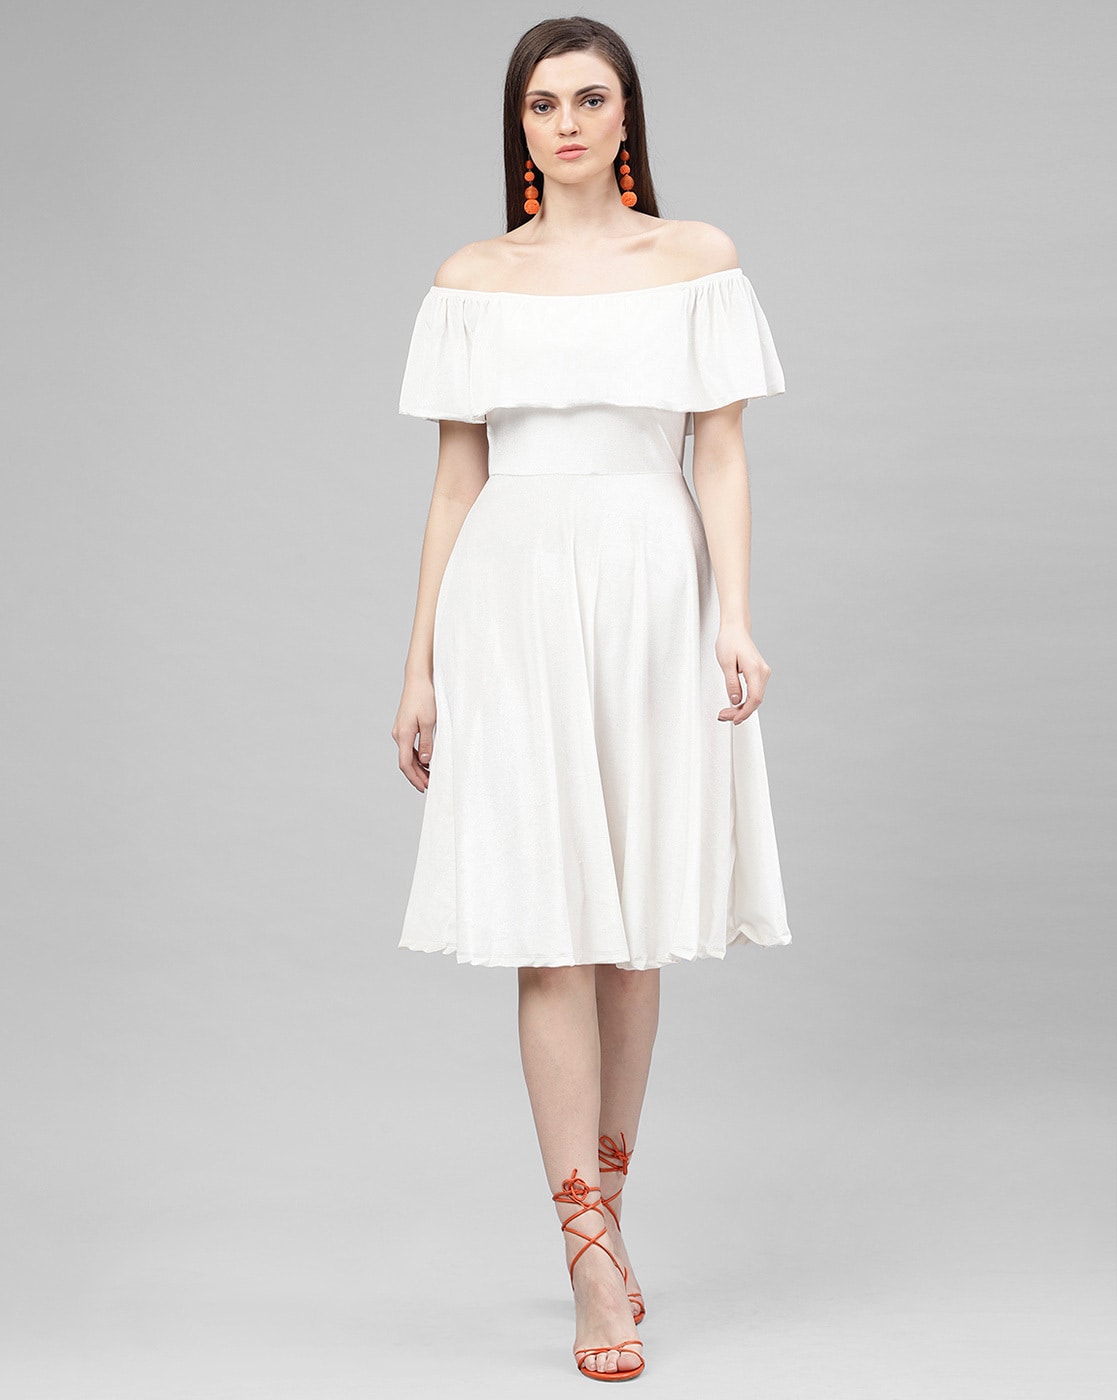 25 Gorgeous Off-The-Shoulder Wedding Dresses / Blog / Casablanca Bridal